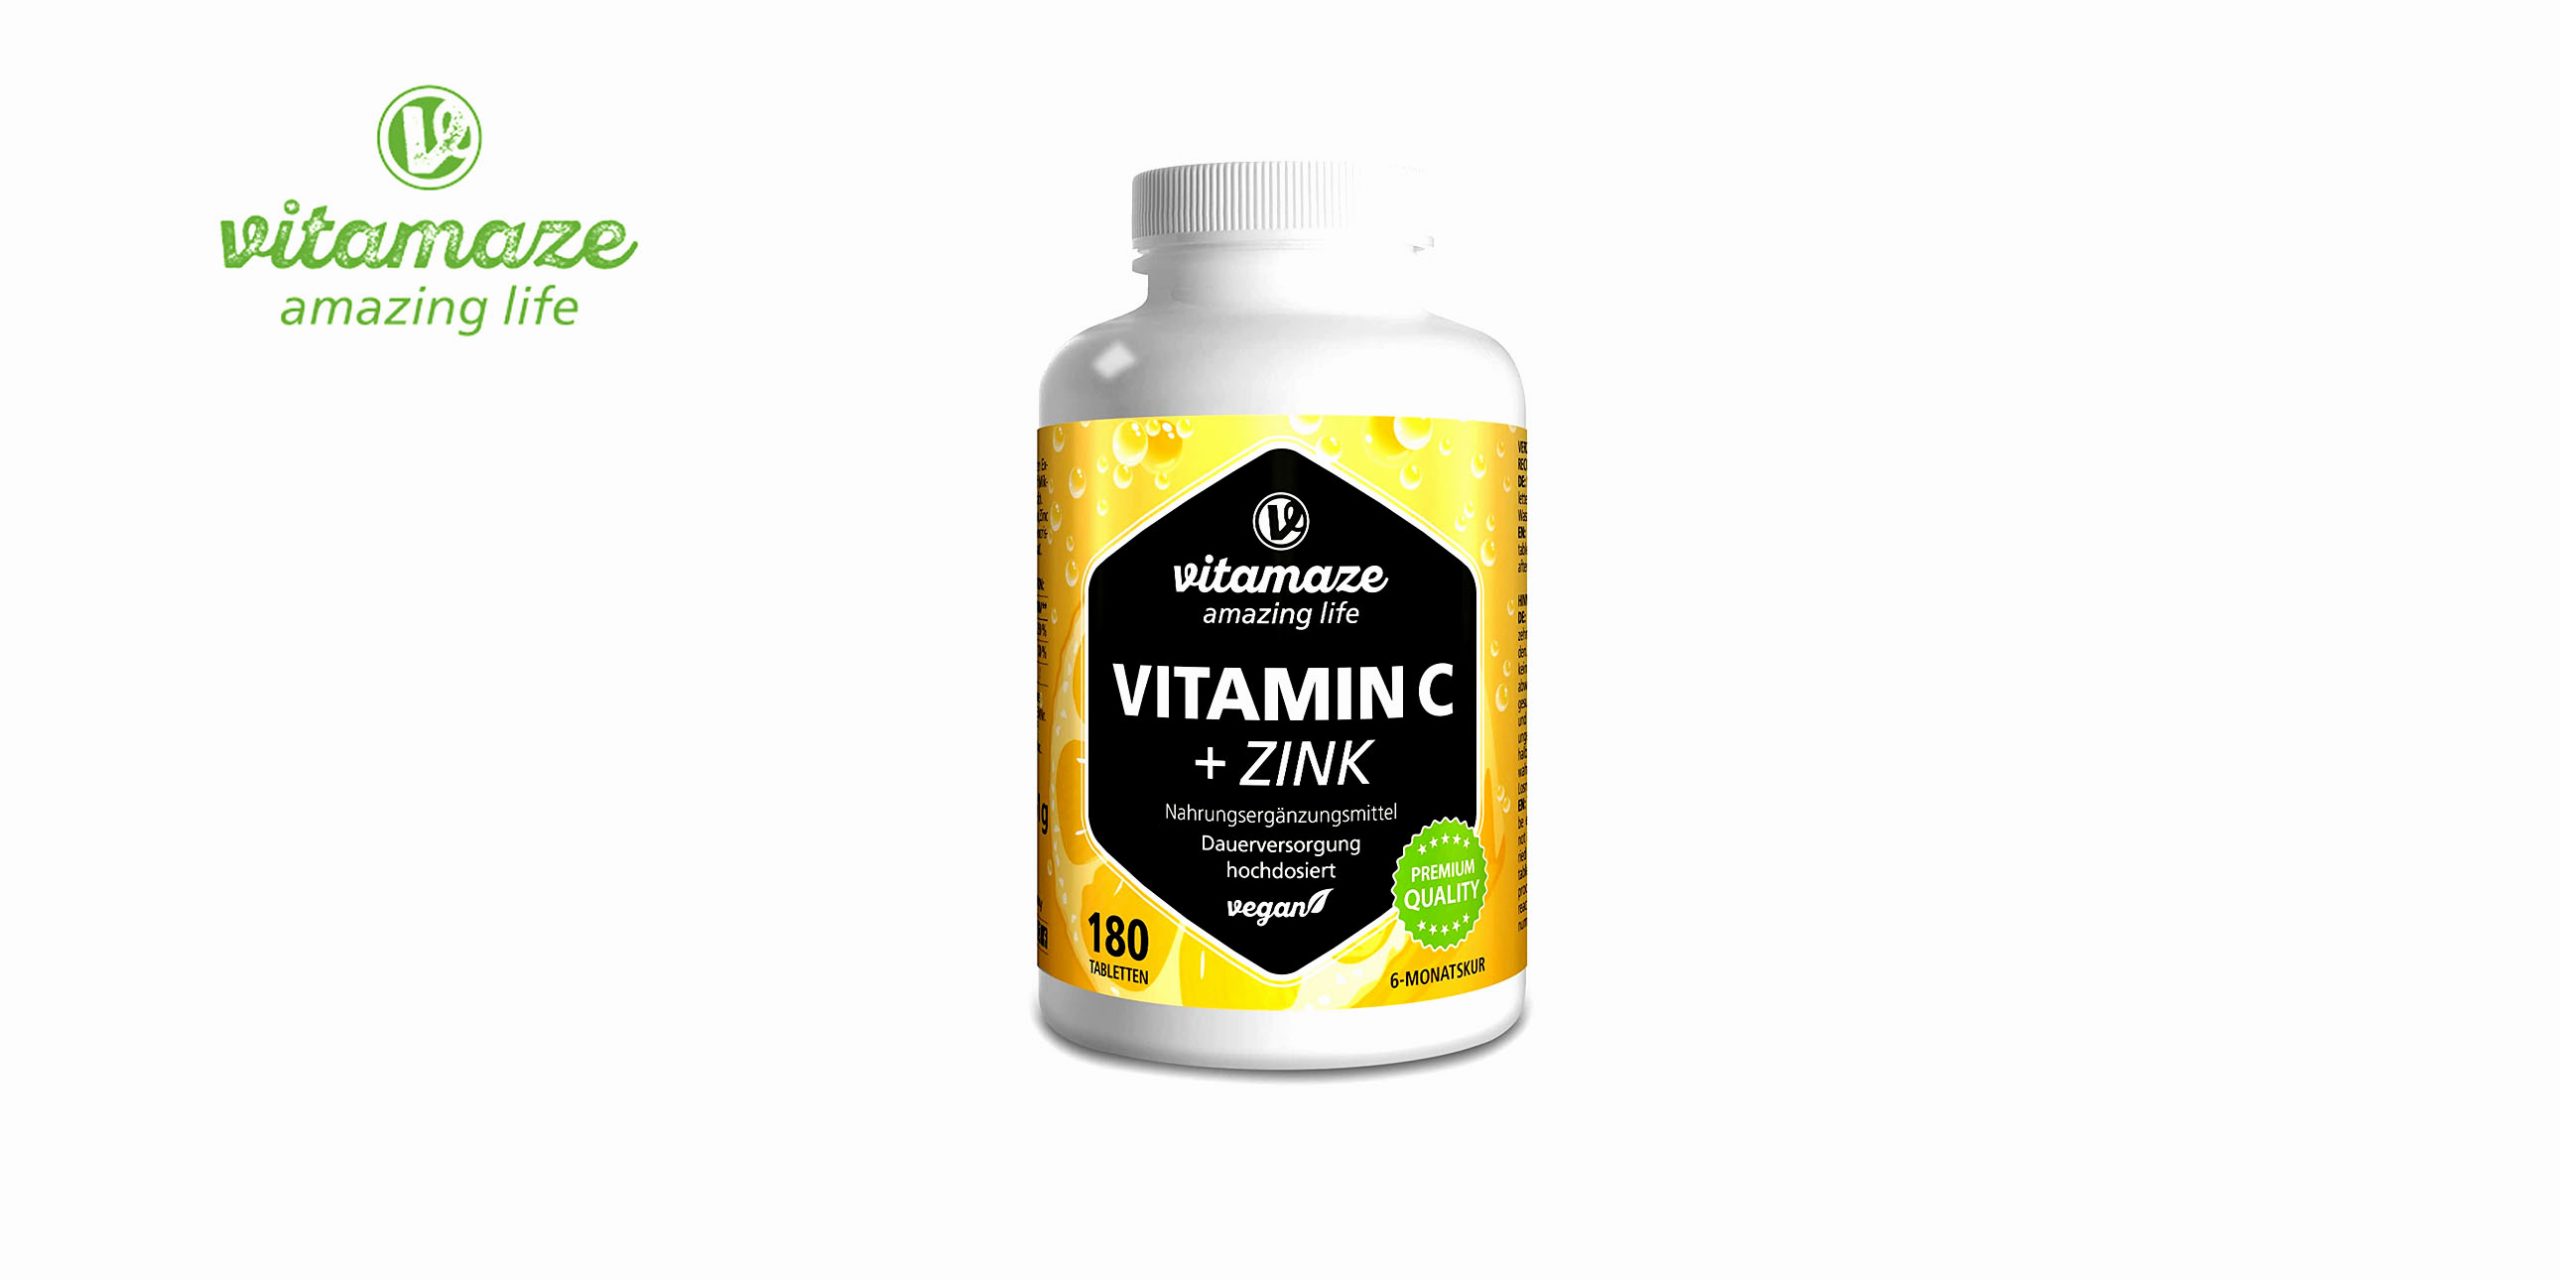 Vitamaze® Vitamina C 1000 mg + Zinc Vegana